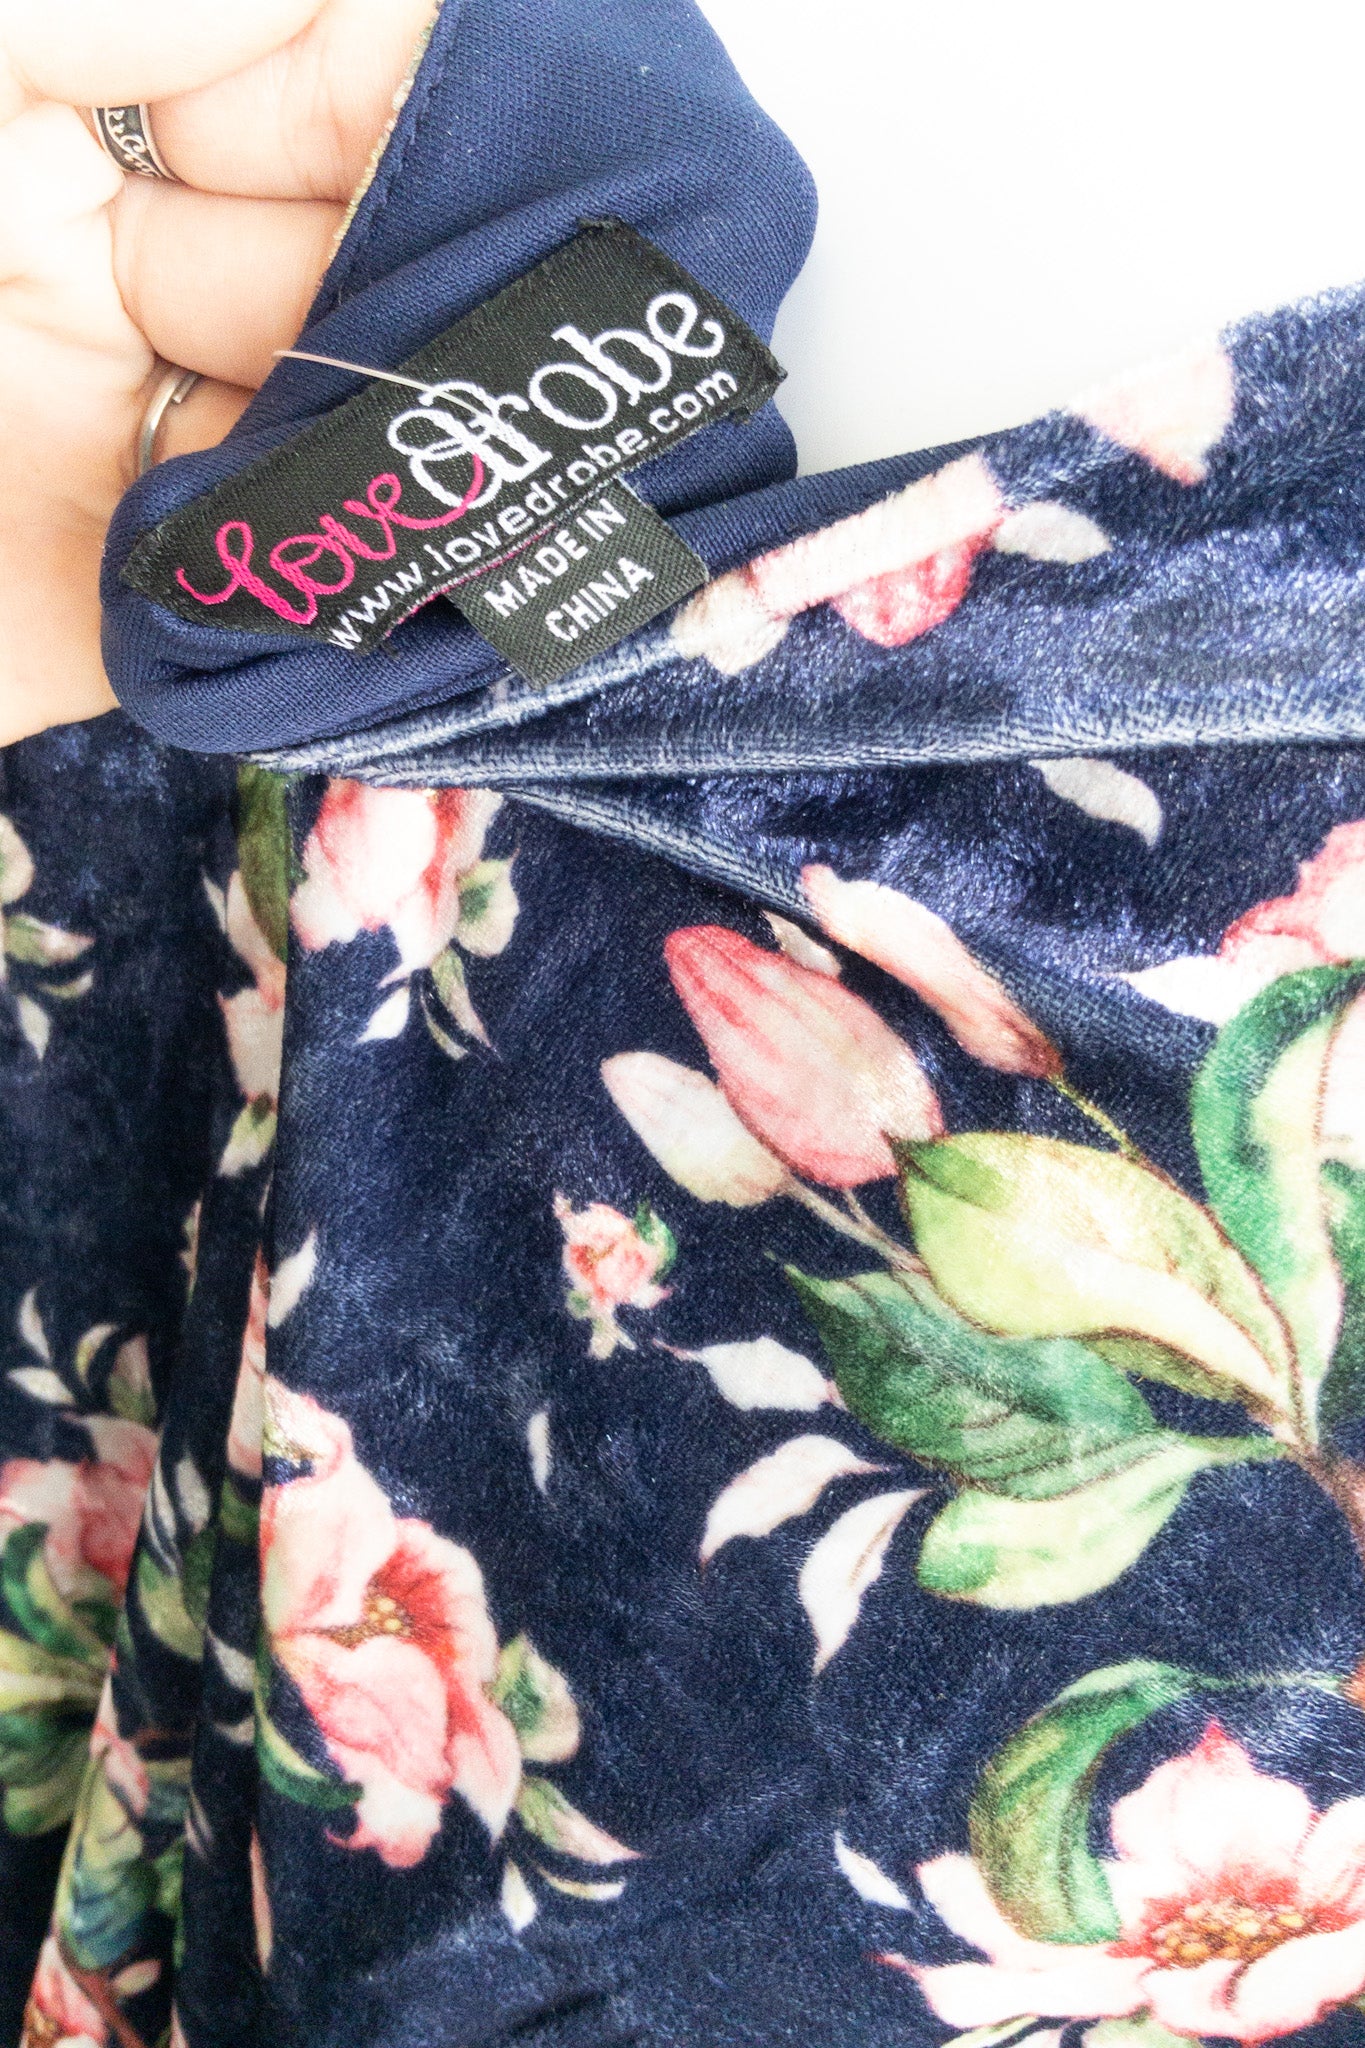 LOVEDROBE Velvet Floral V-Neckline Wrap Maxi Dress - Size 22